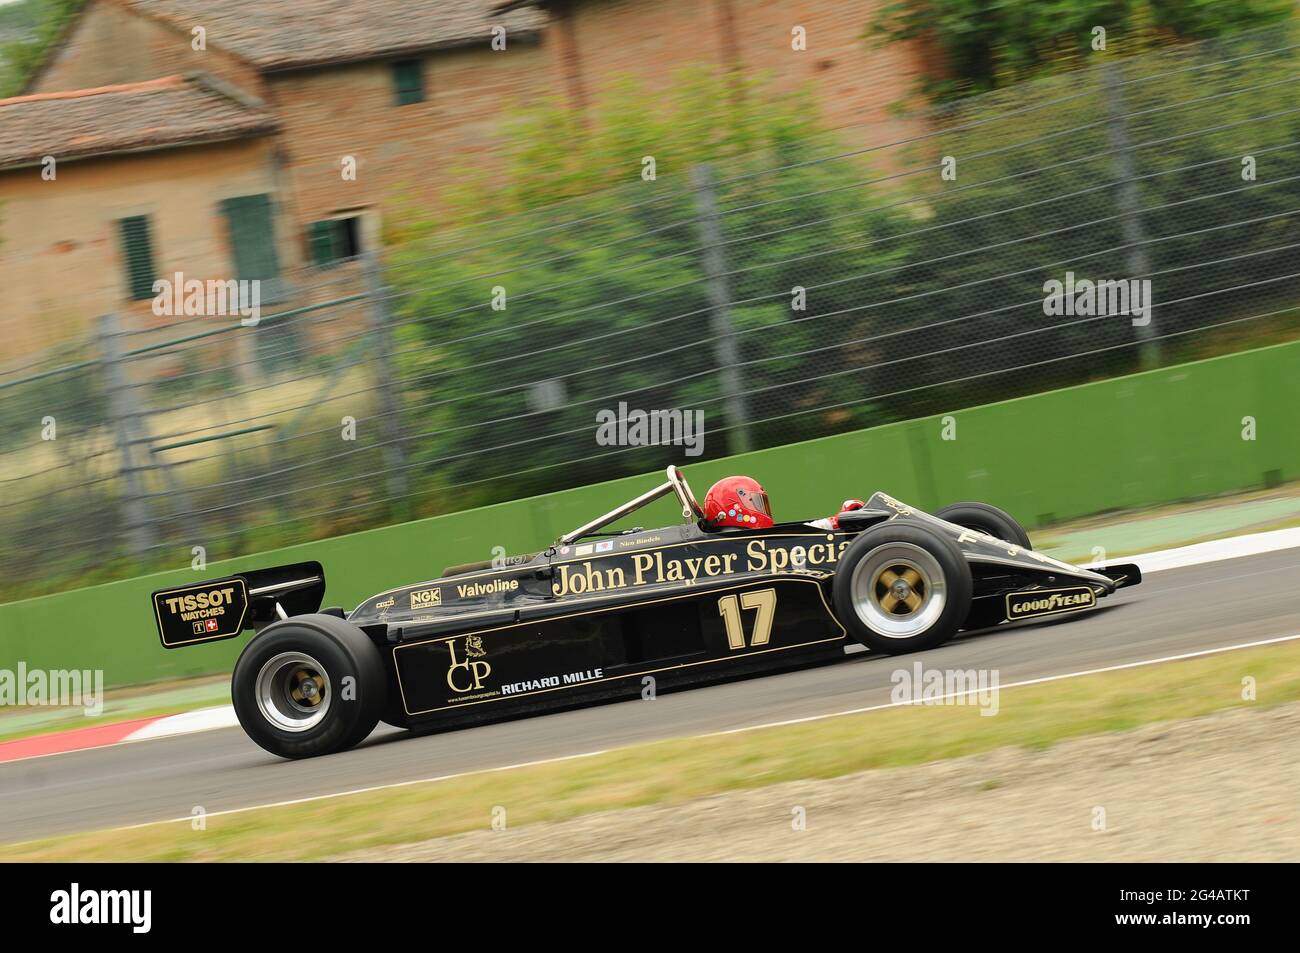 Imola, 6. Juni 2012: Unbekannt Run auf Classic F1 Car 1982 Lotus 87 ex Elio De Angelis - Nigel Mansell während des Trainings von Imola Classic 2012 auf Imola Circ Stockfoto